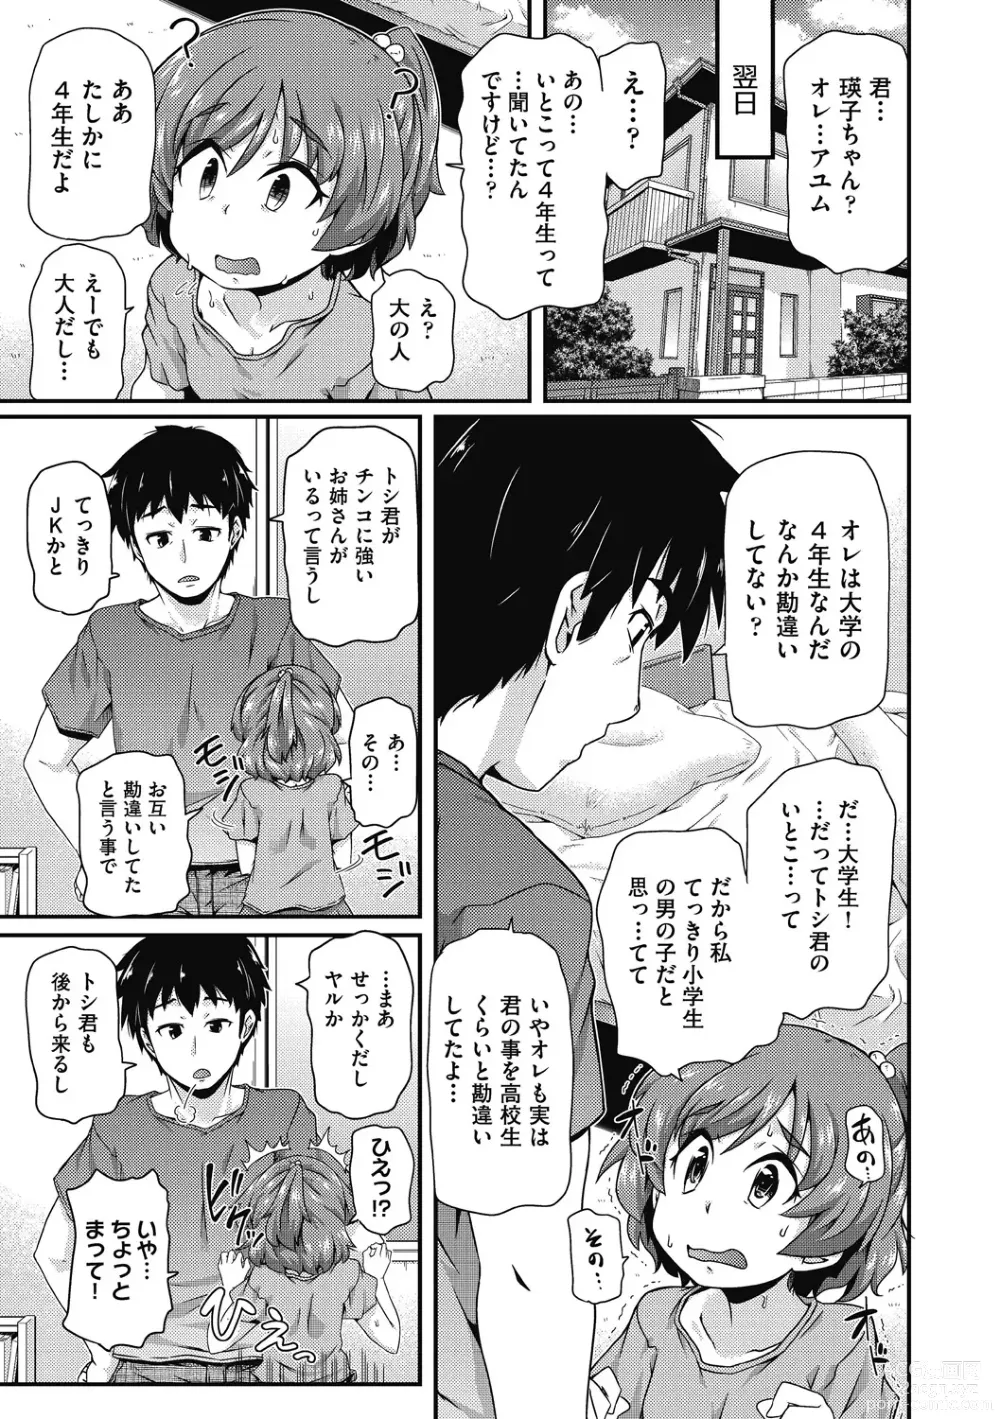 Page 9 of manga Chiisame Vacance